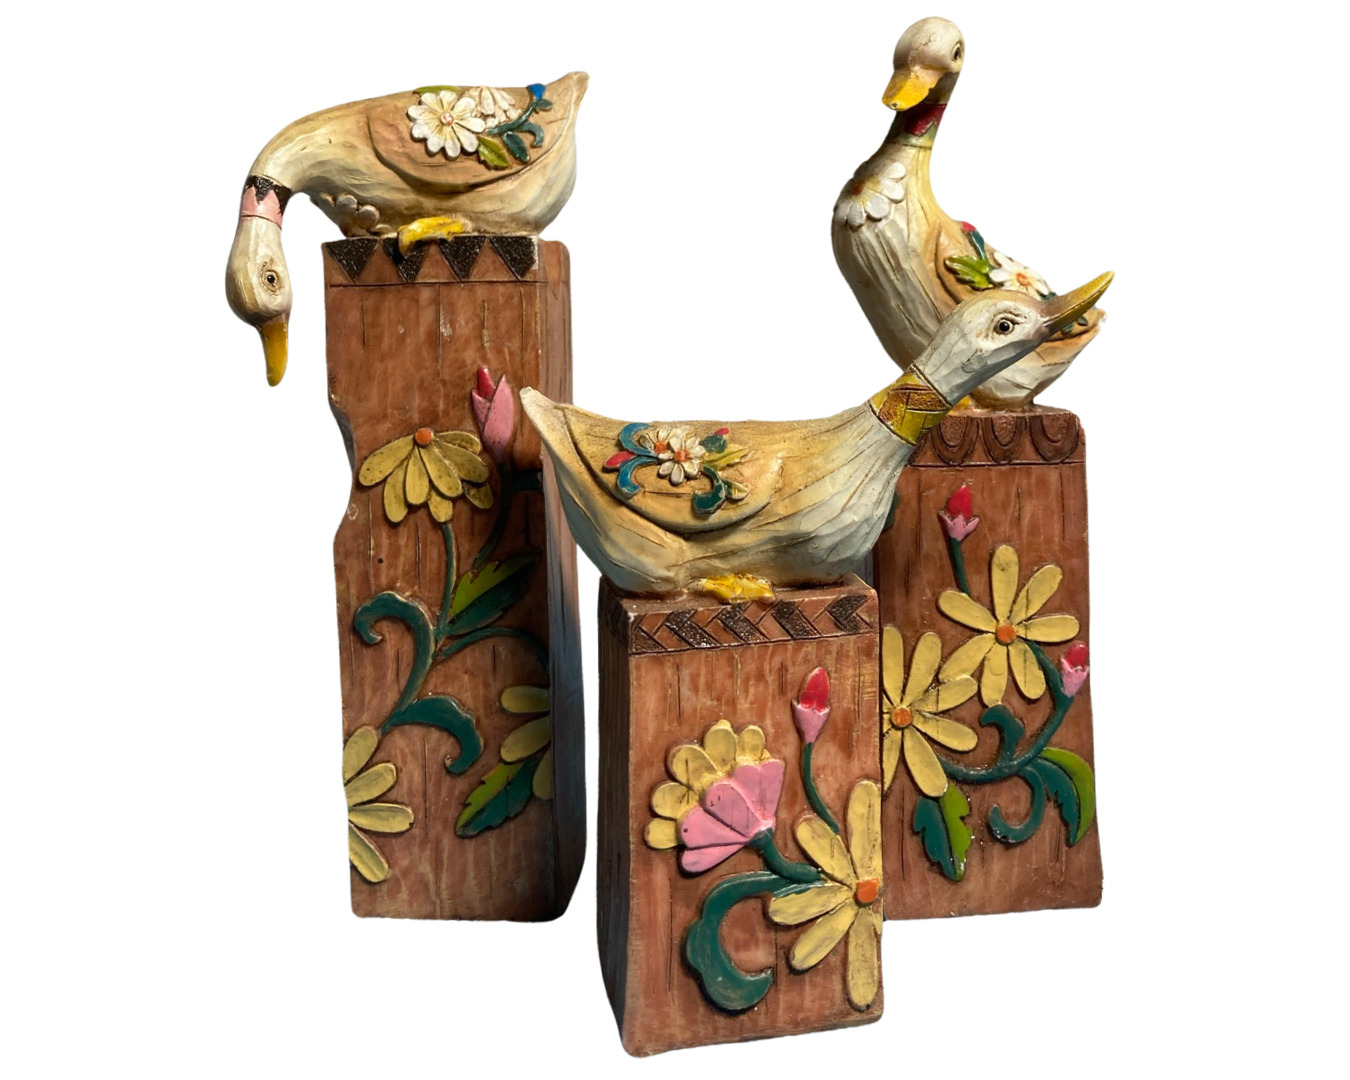 Decorative Resin Ducks on Block Wood Finish Figurines- 3 bundle